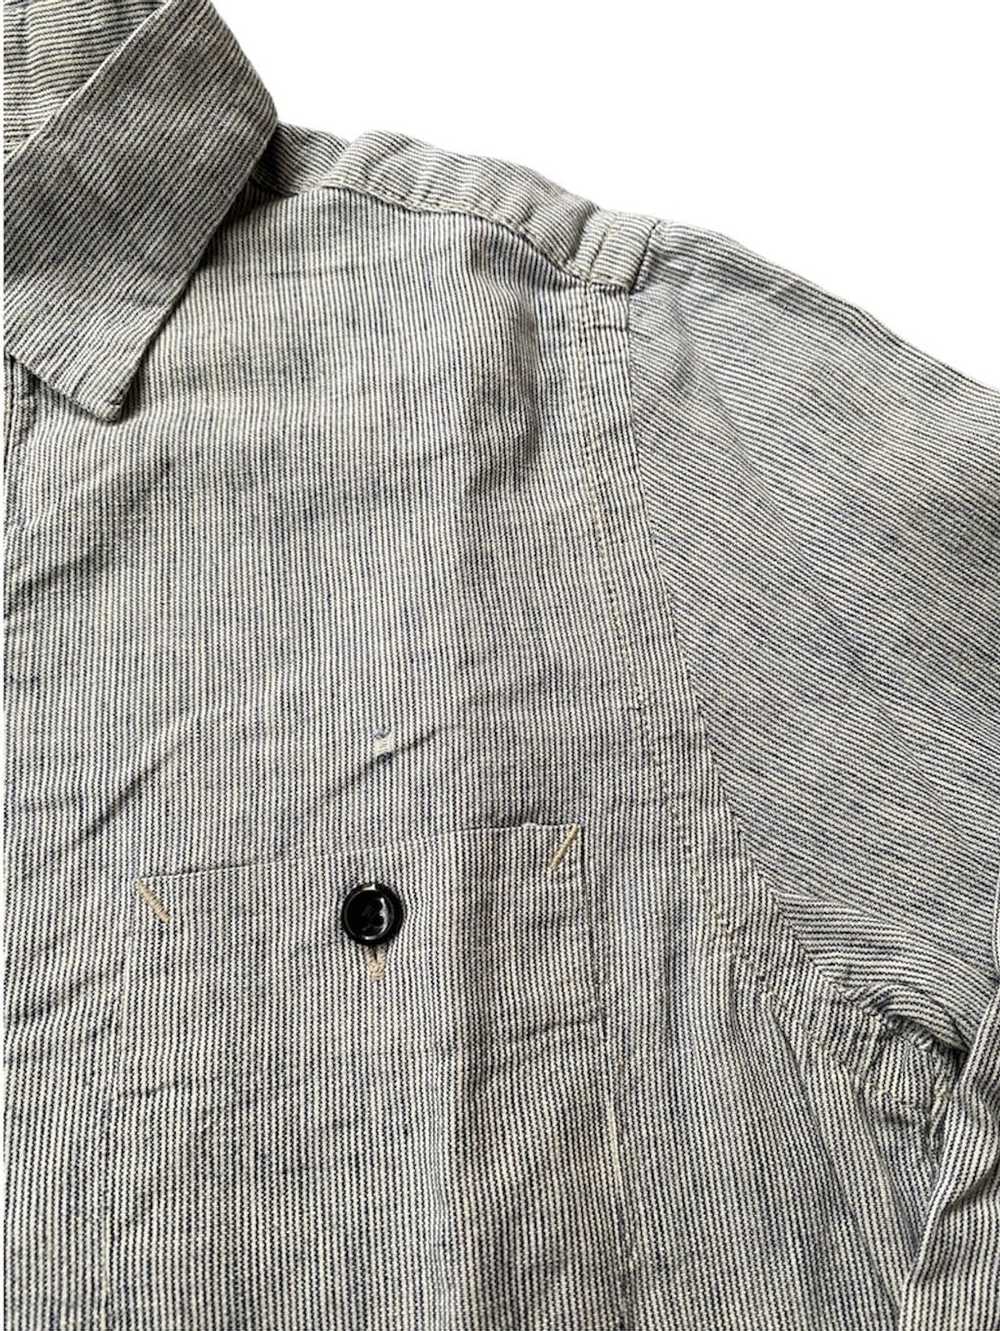 Japanese Brand × Omnigod Omnigod Selvedge Shirt - image 6